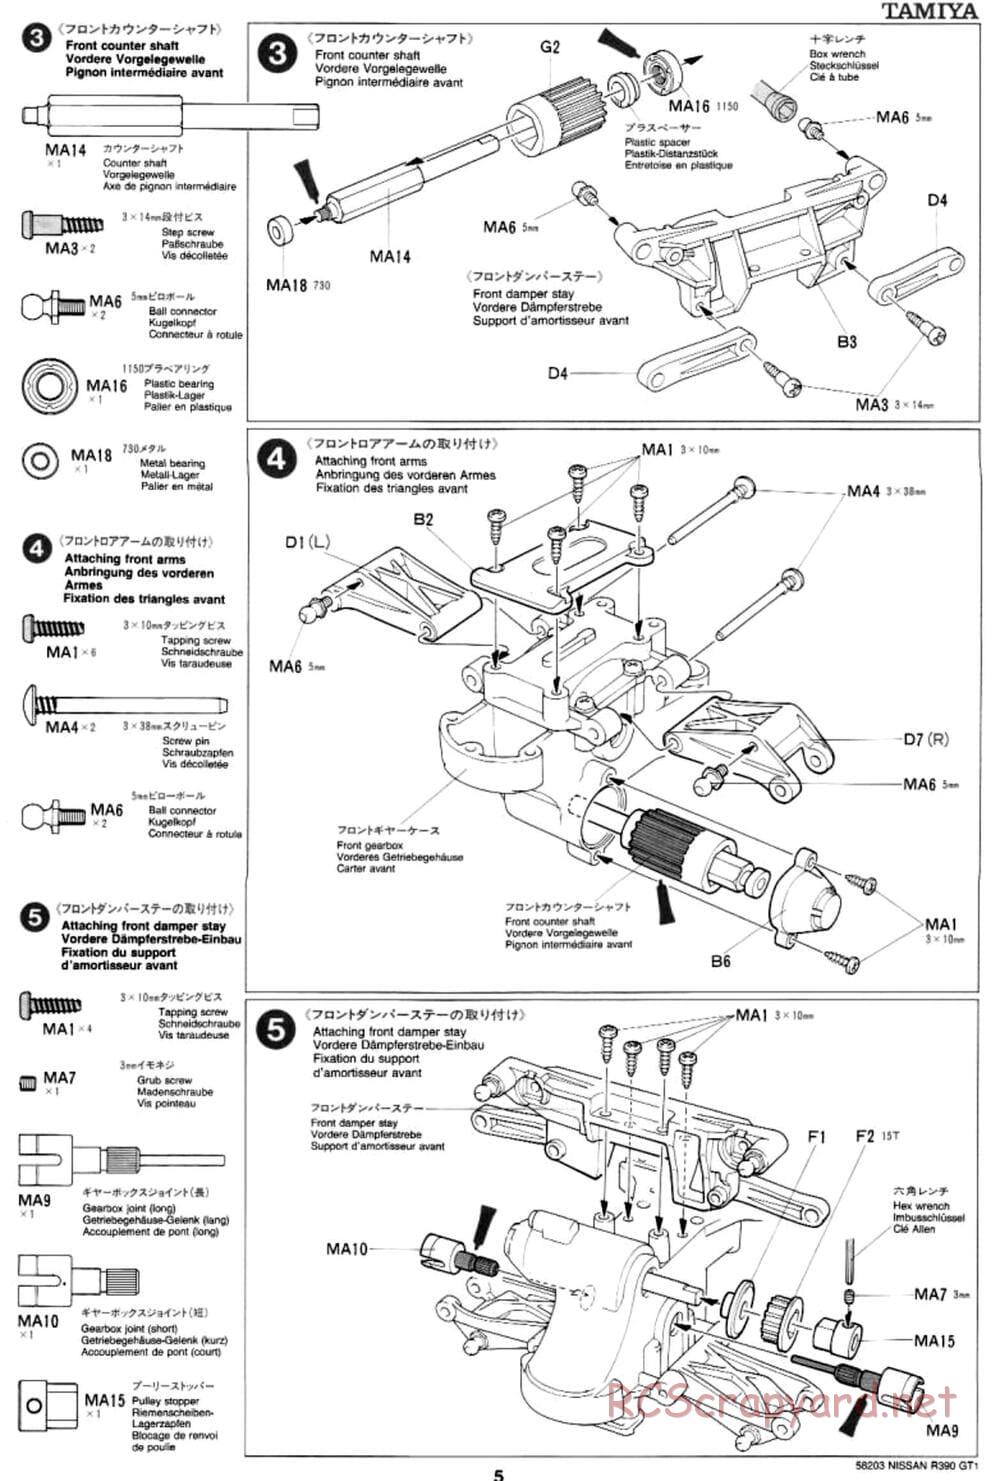 Tamiya - Nissan R390 GT1 - TA-03R Chassis - Manual - Page 5